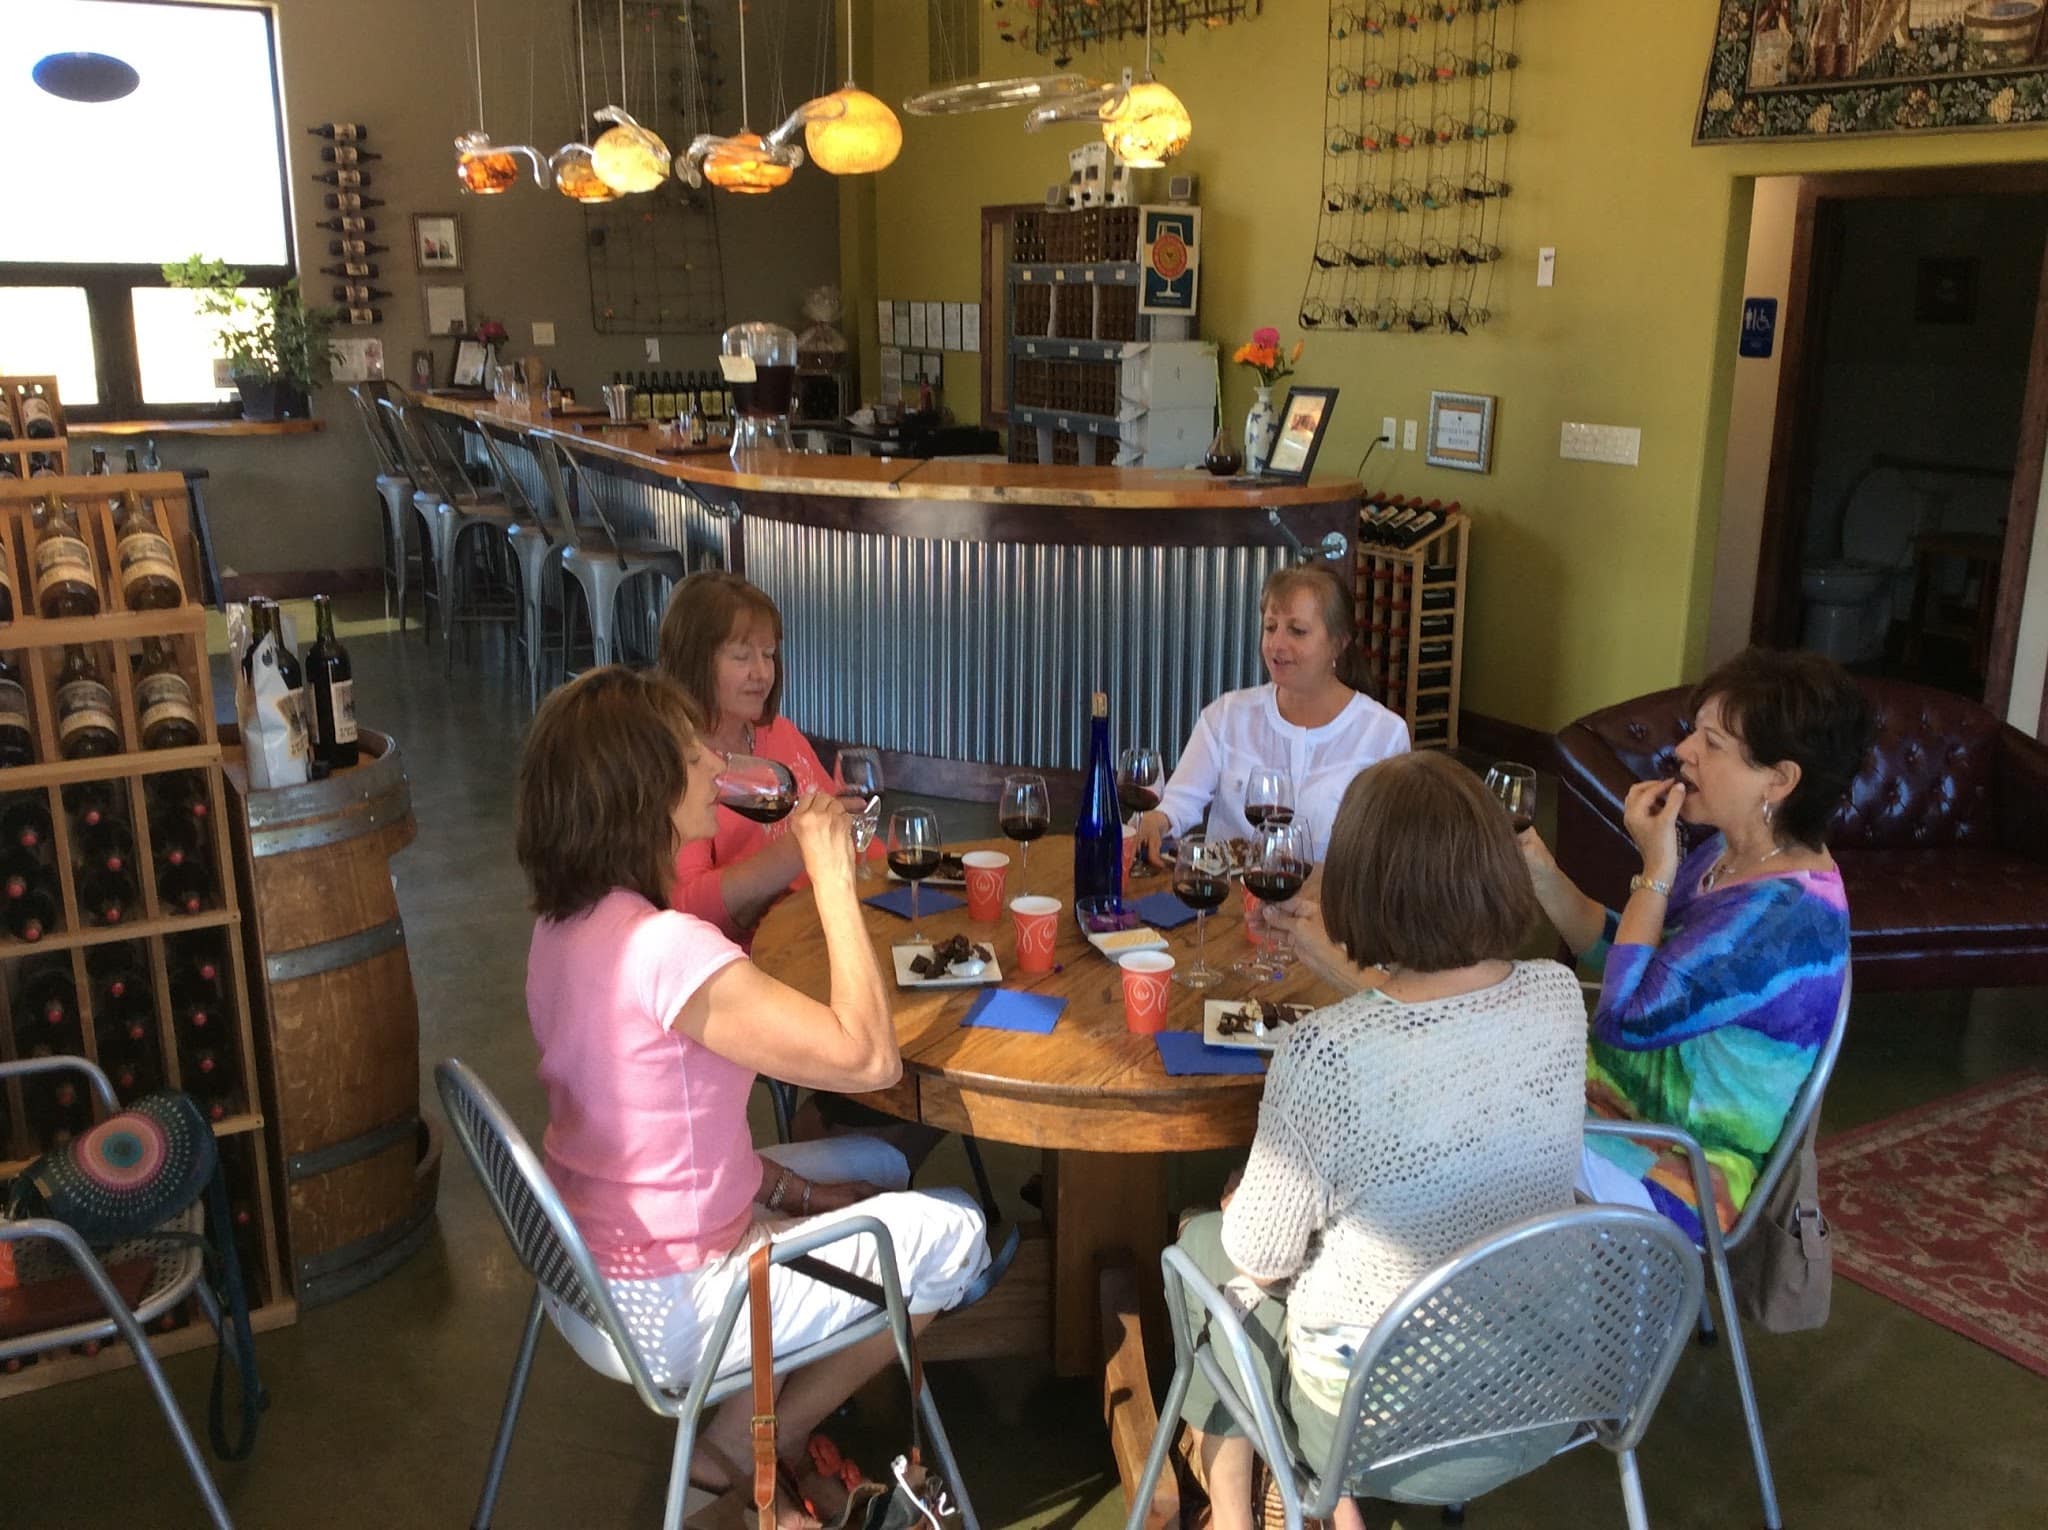 Five ladies wine tasting around a round table.